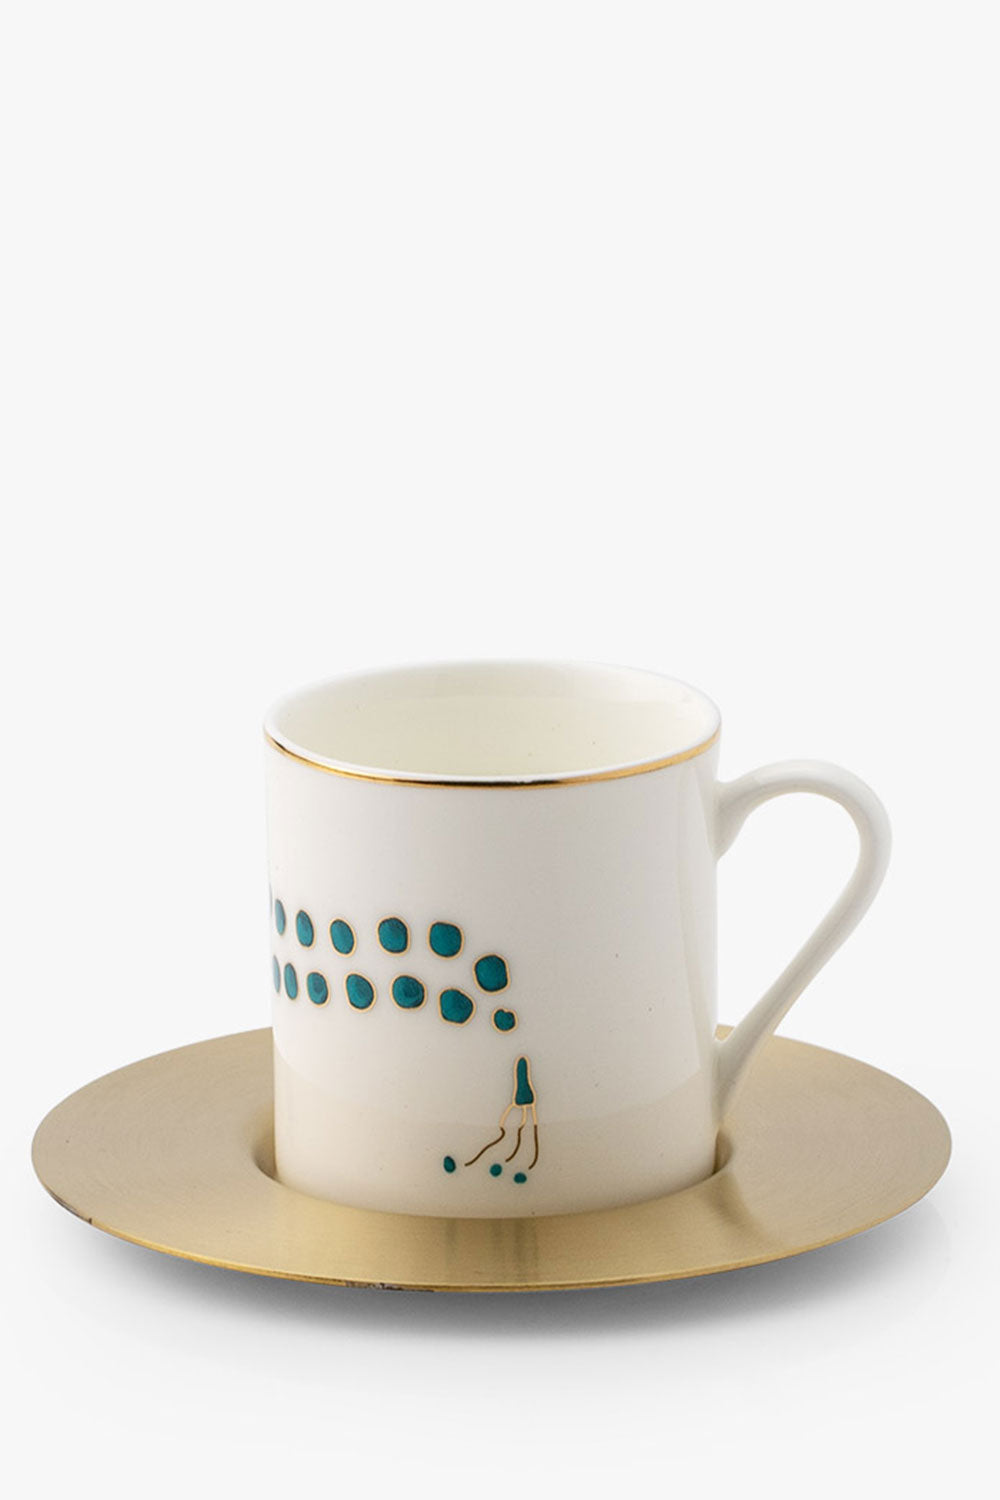 Mashbah Espresso Cup with Saucer, Teal, Set of 6